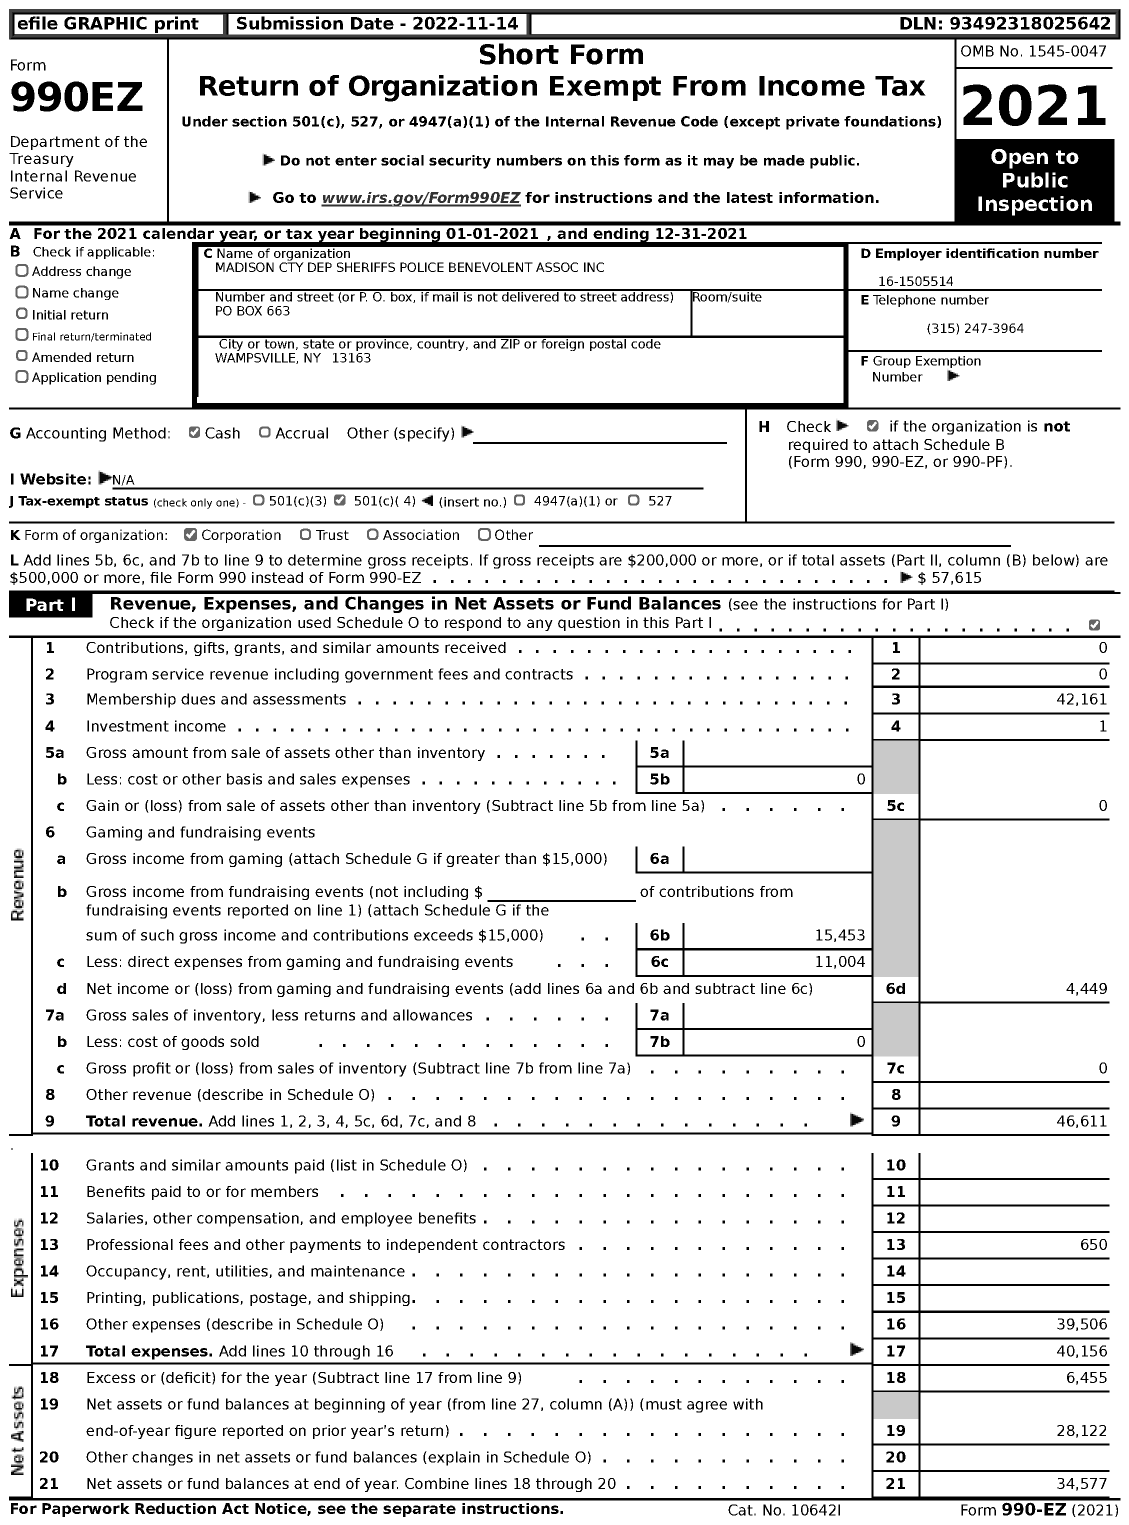 Image of first page of 2021 Form 990EZ for Madison Cty Dep Sheriffs Police Benevolent Association